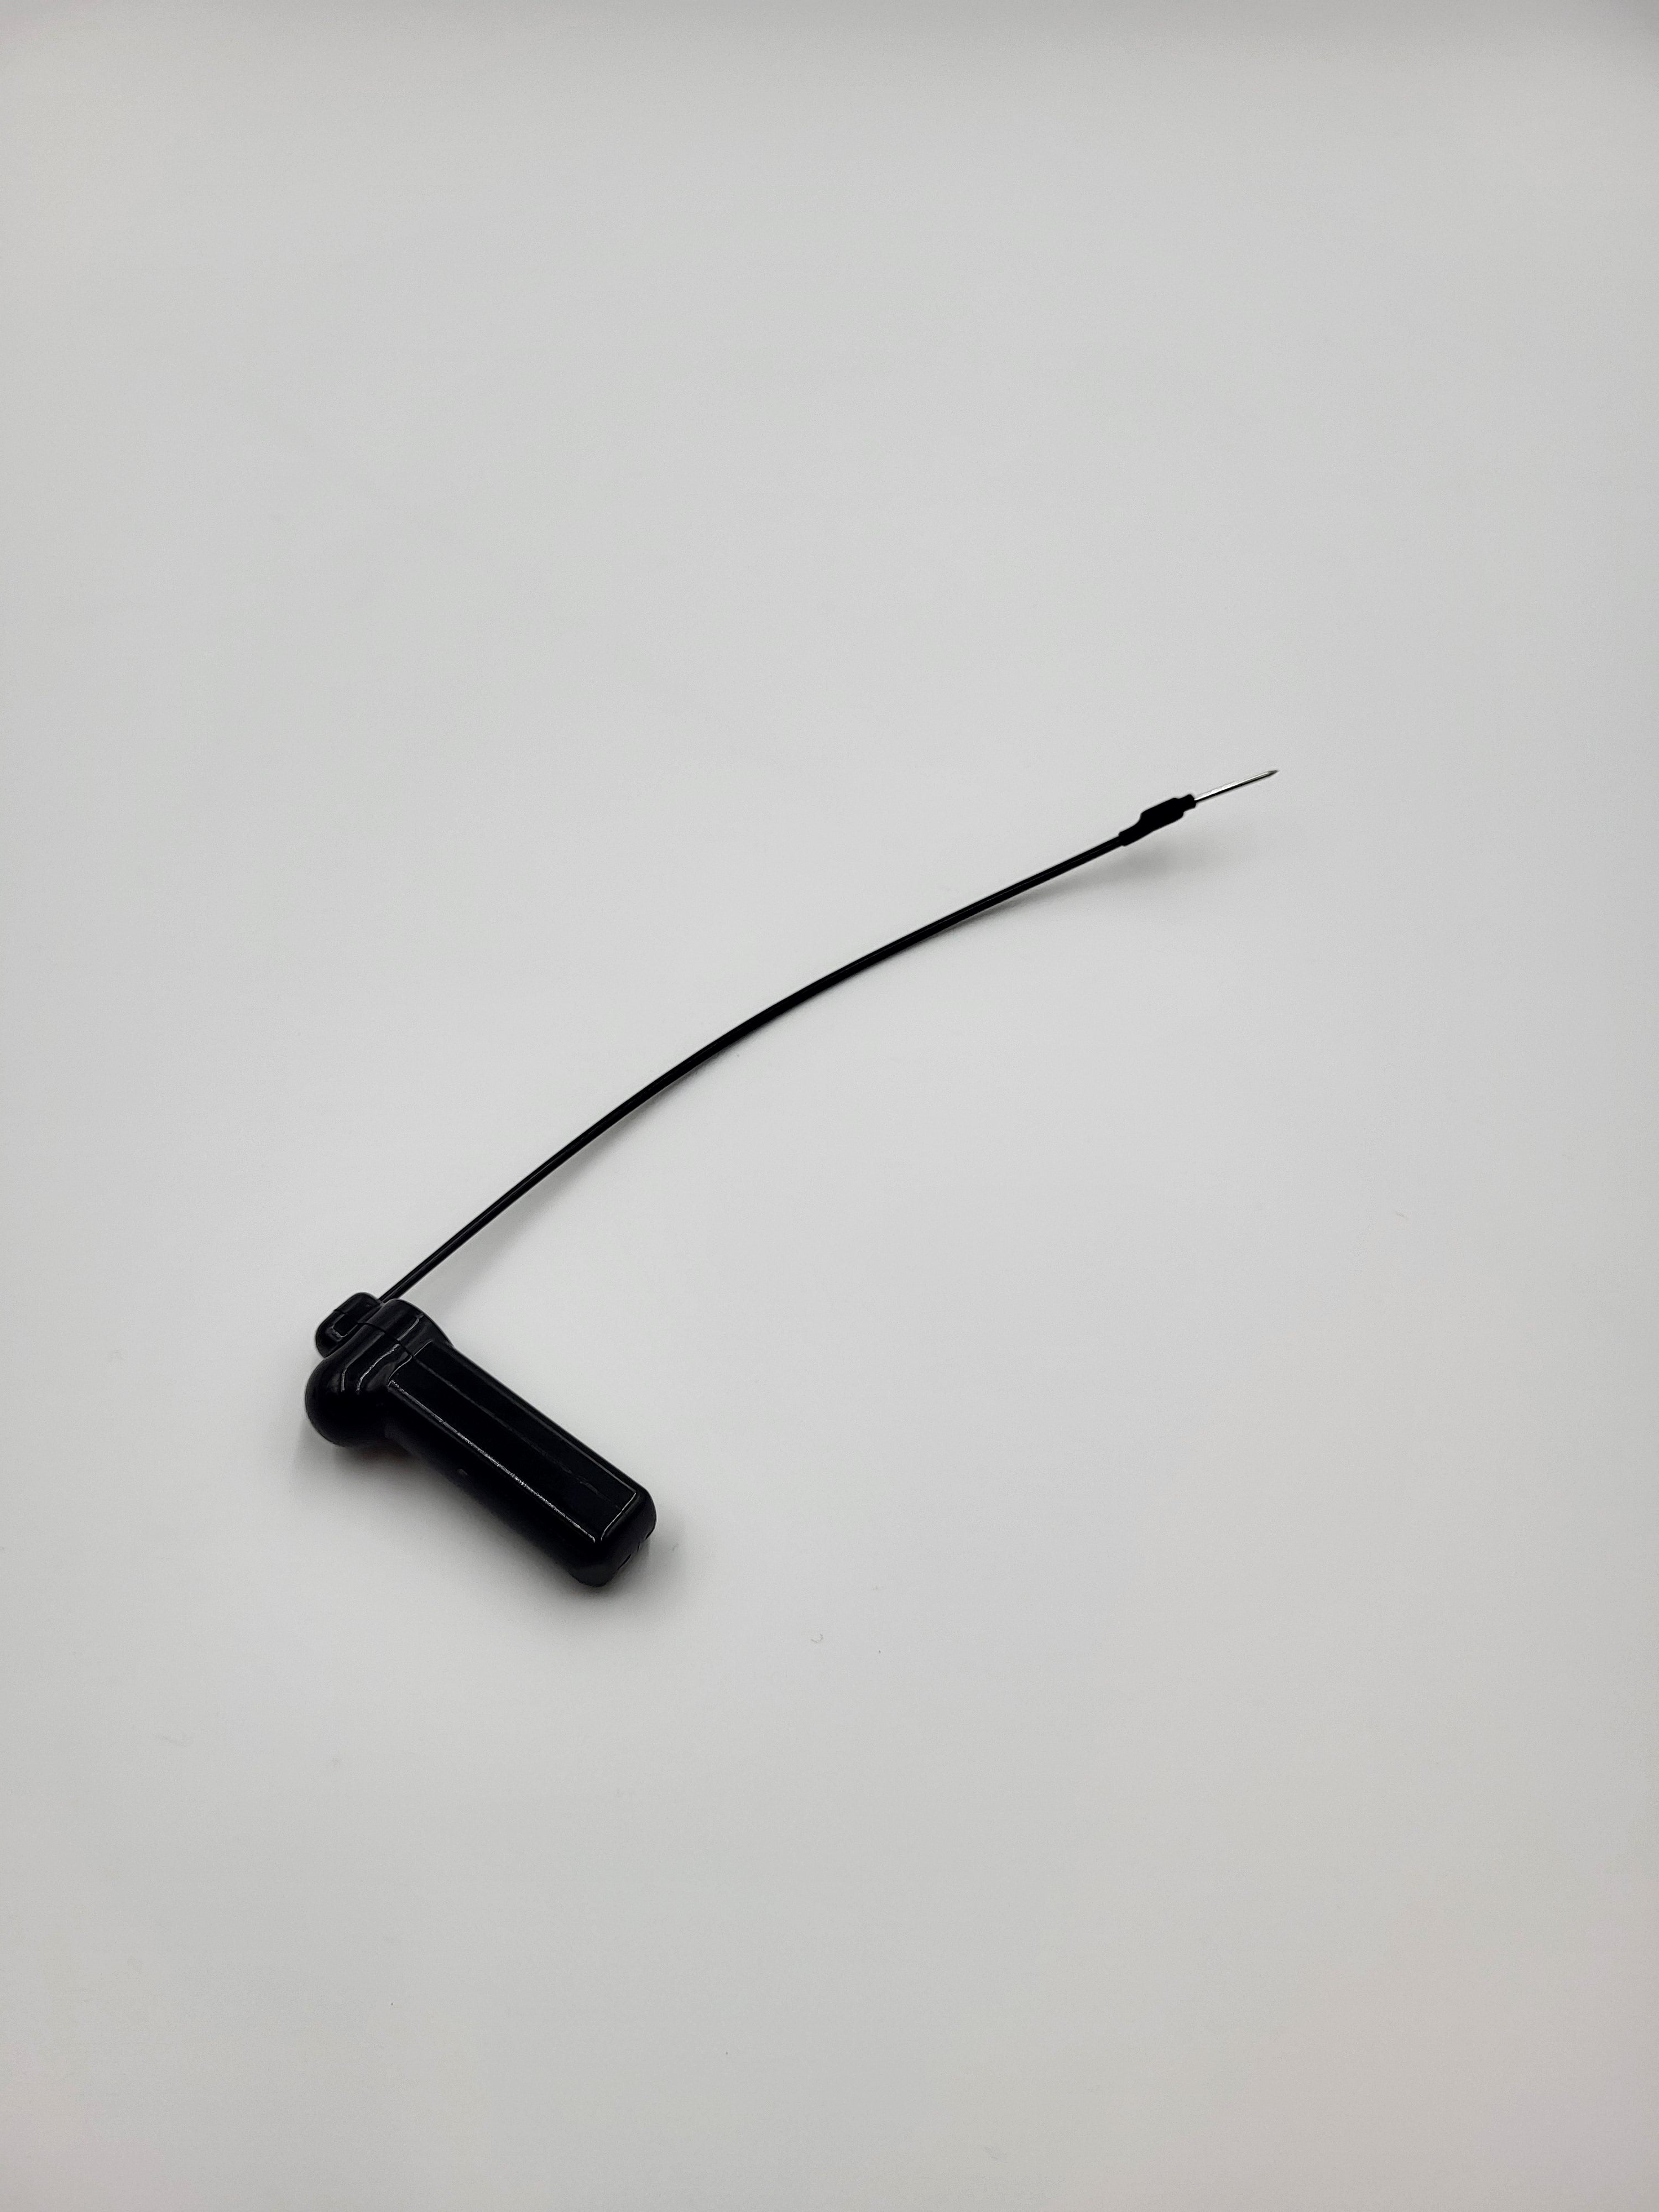 Pencil tag AM med integreret wire, 16 cm